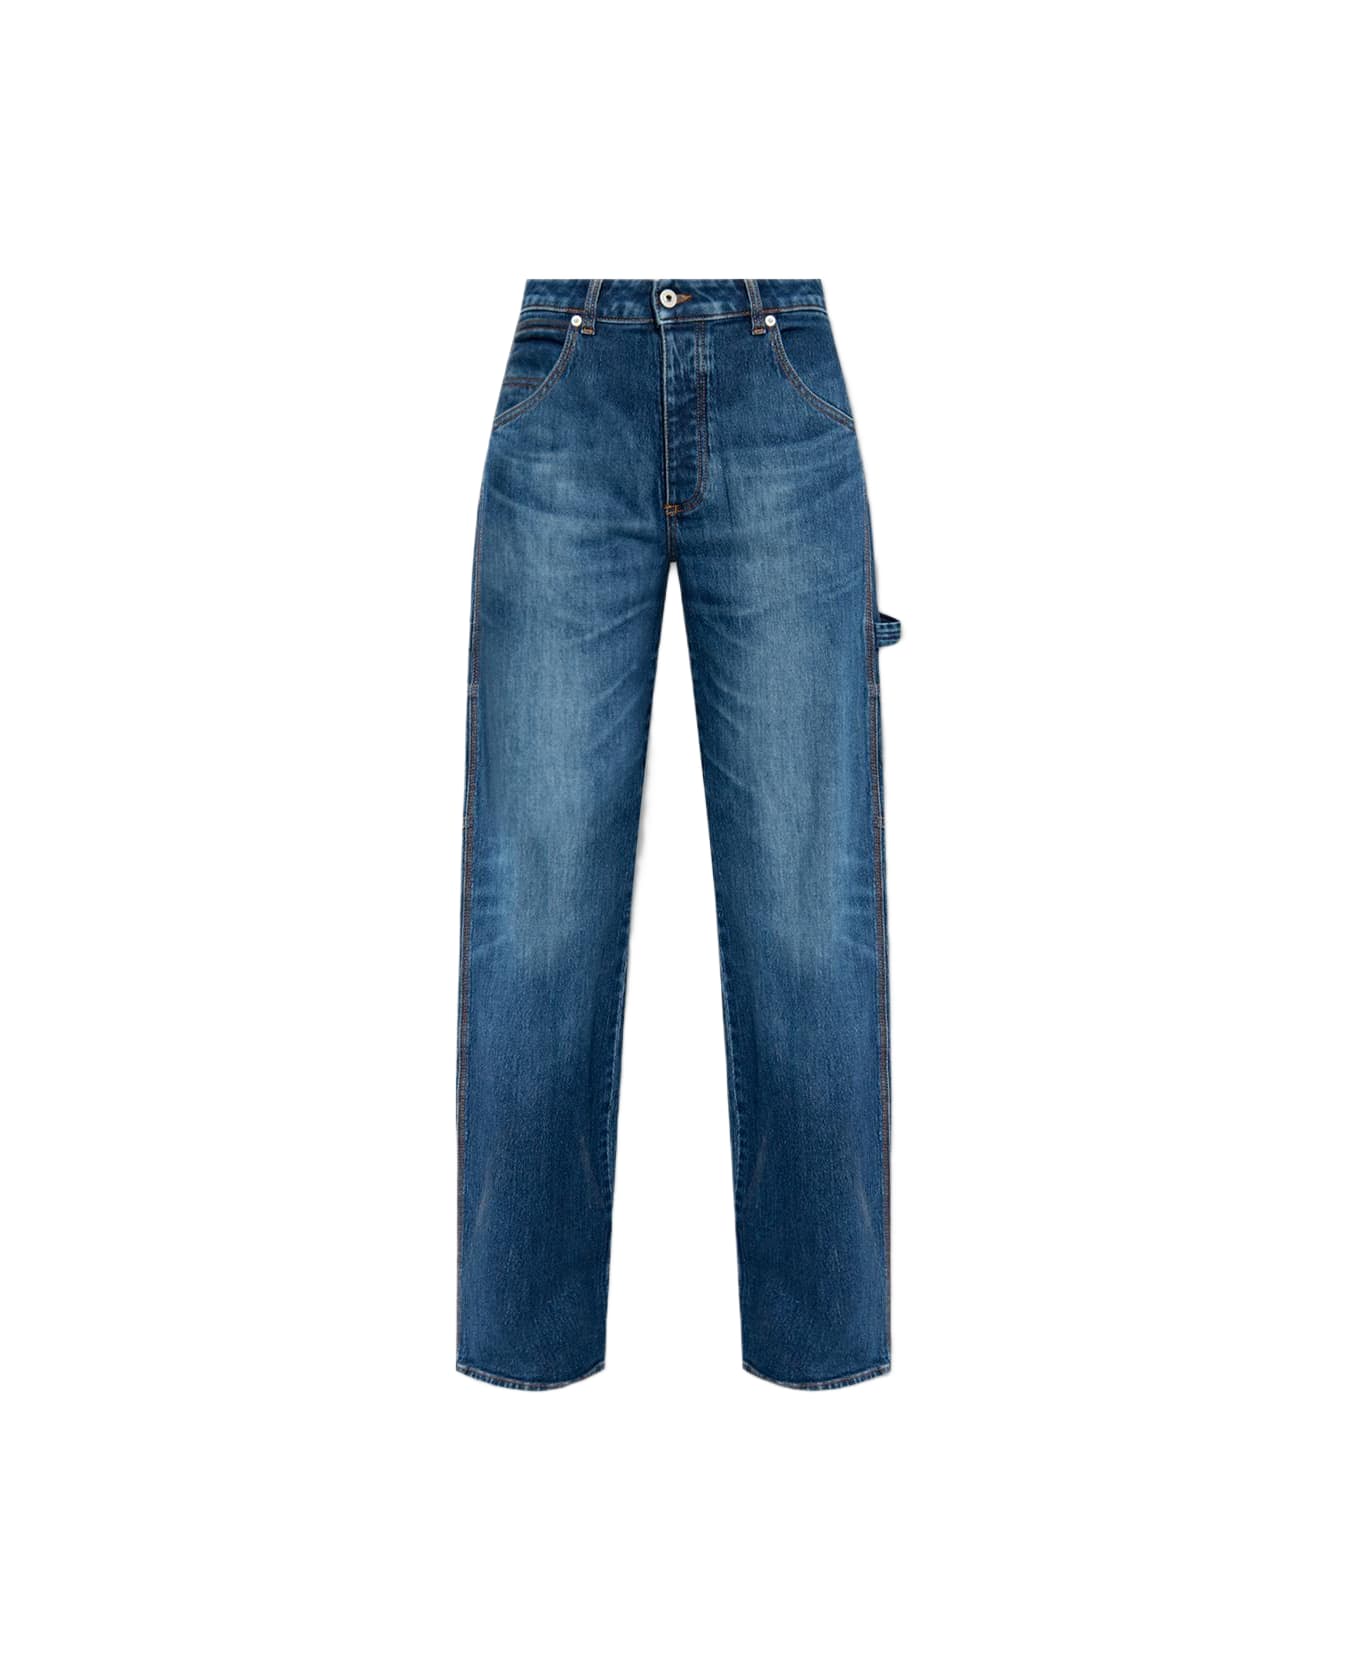 HERON PRESTON Straight Leg Jeans - Vintage Wash Blue No Color デニム